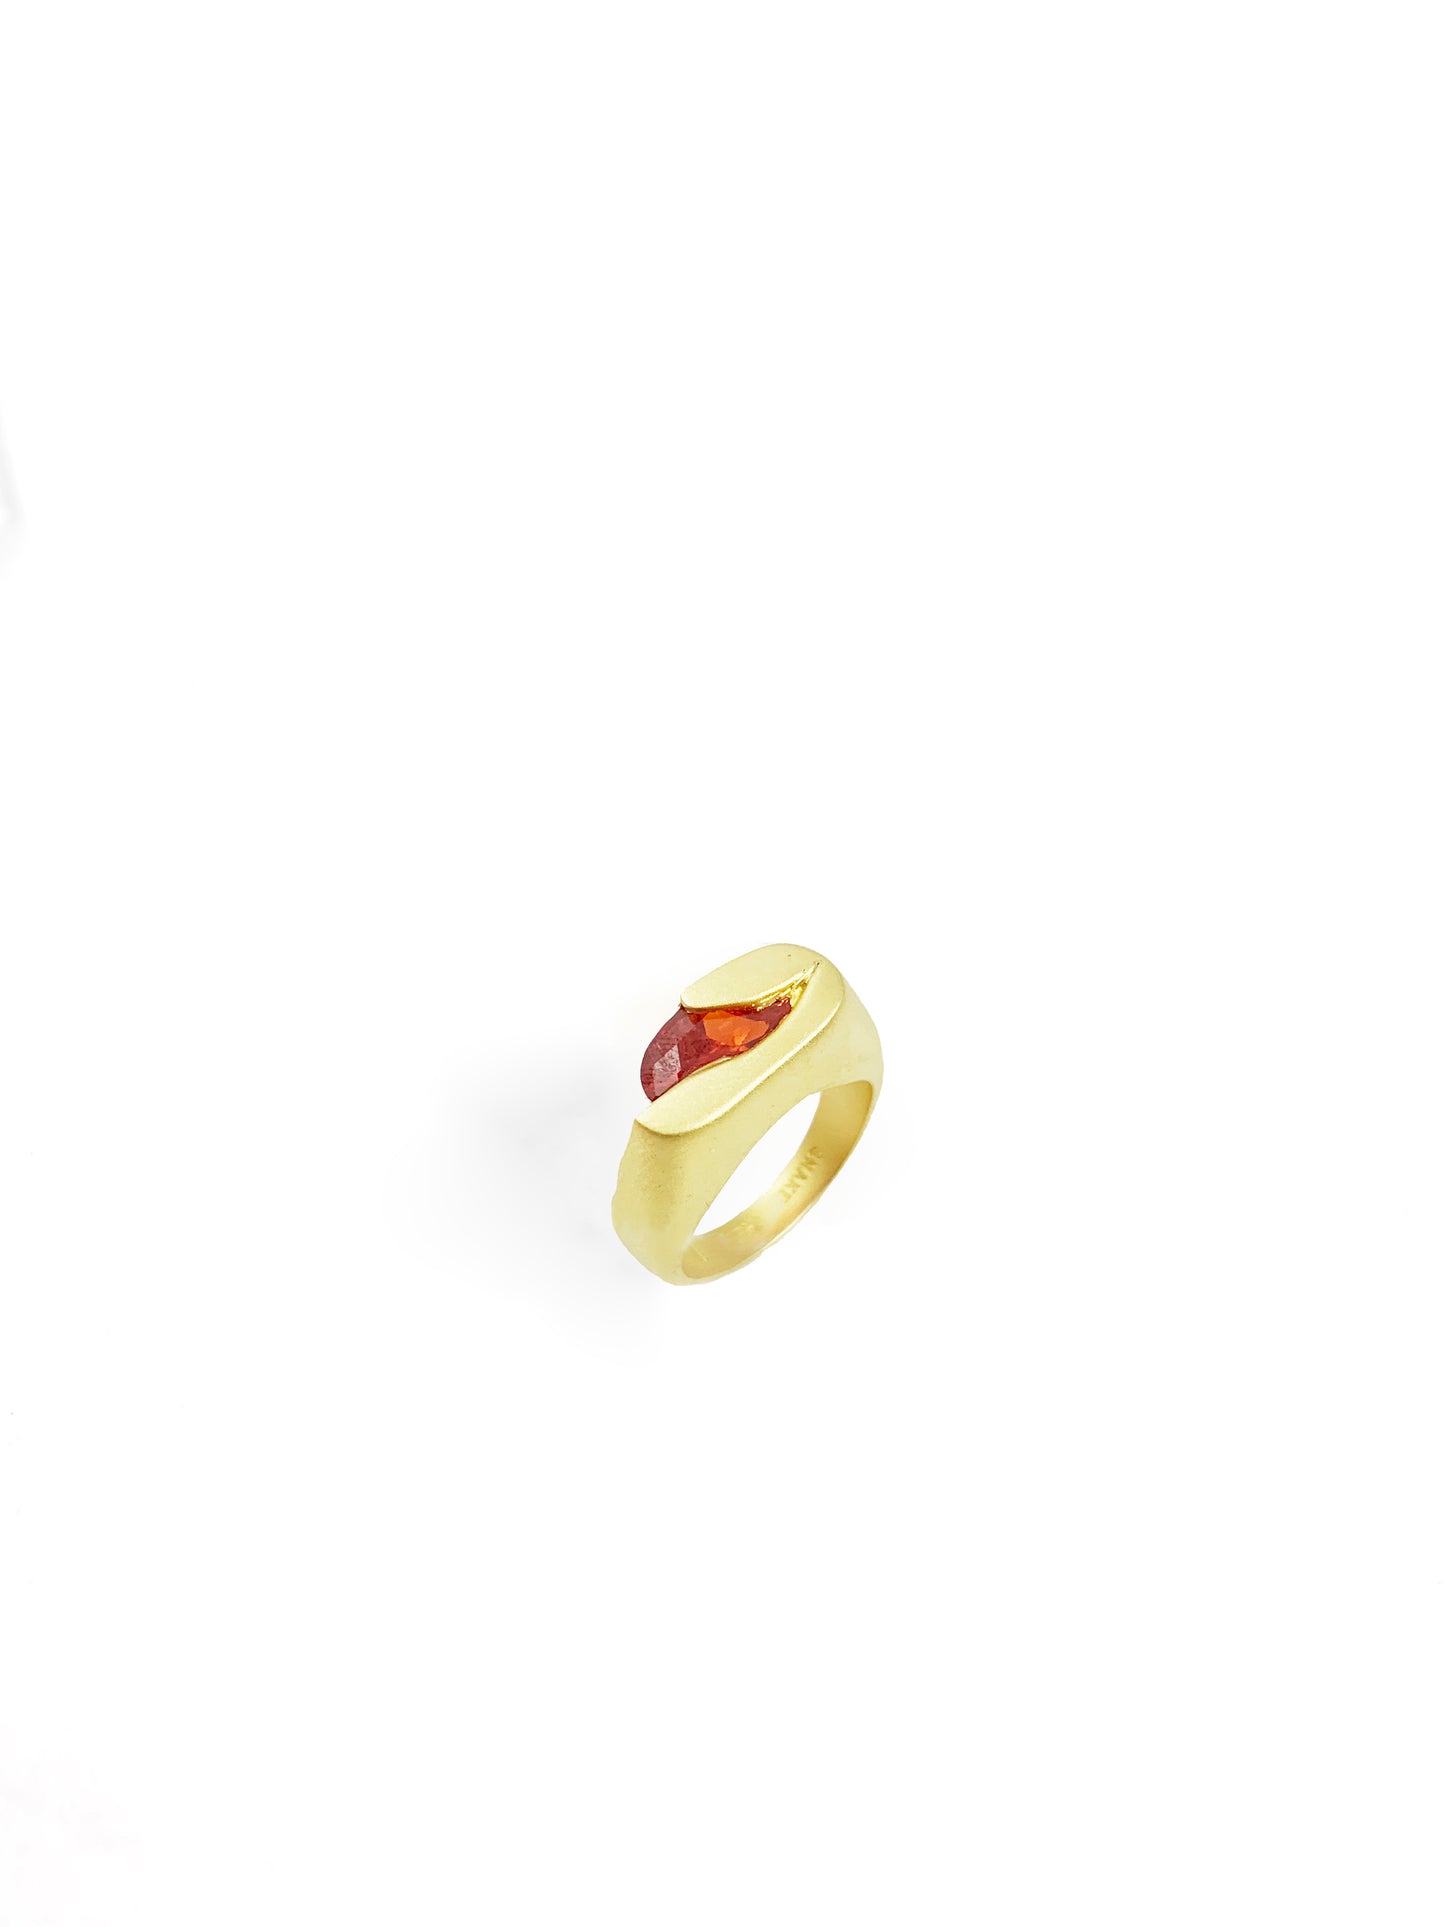 RED STONE IN BROKEN BRICK - 14k gold pinky ring